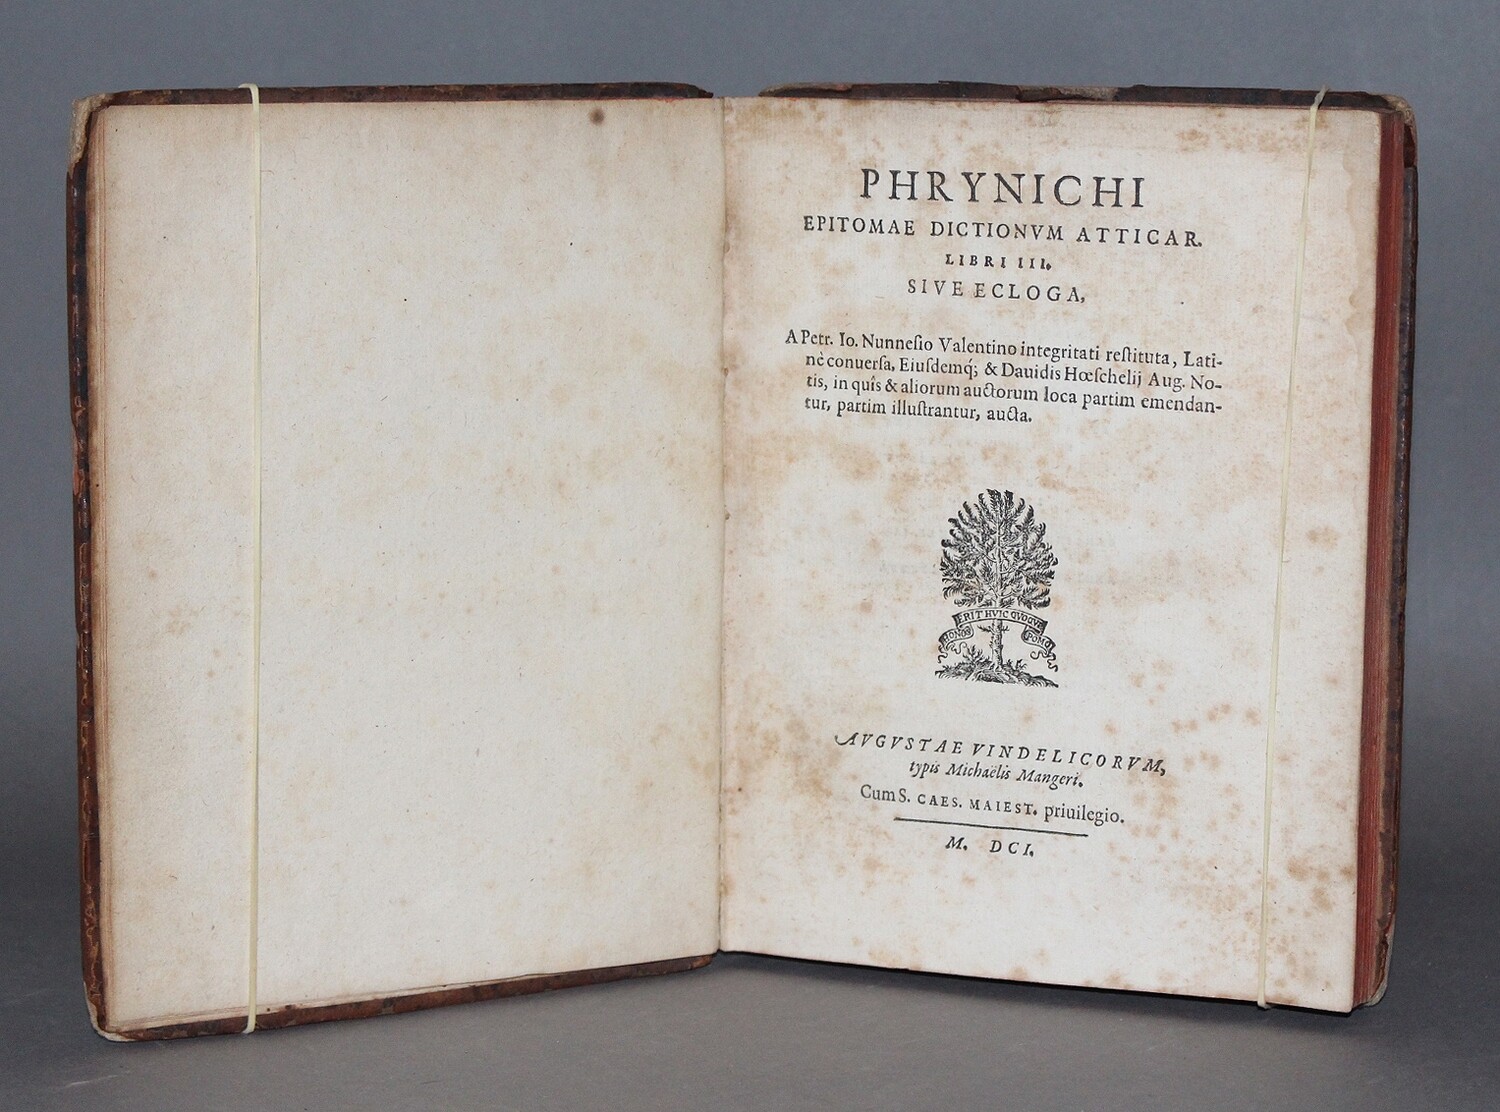 NUNEZ.- Phrynichi Epitomae dictionum Atticar libri III, sive Ecloga..., 1601-1603.